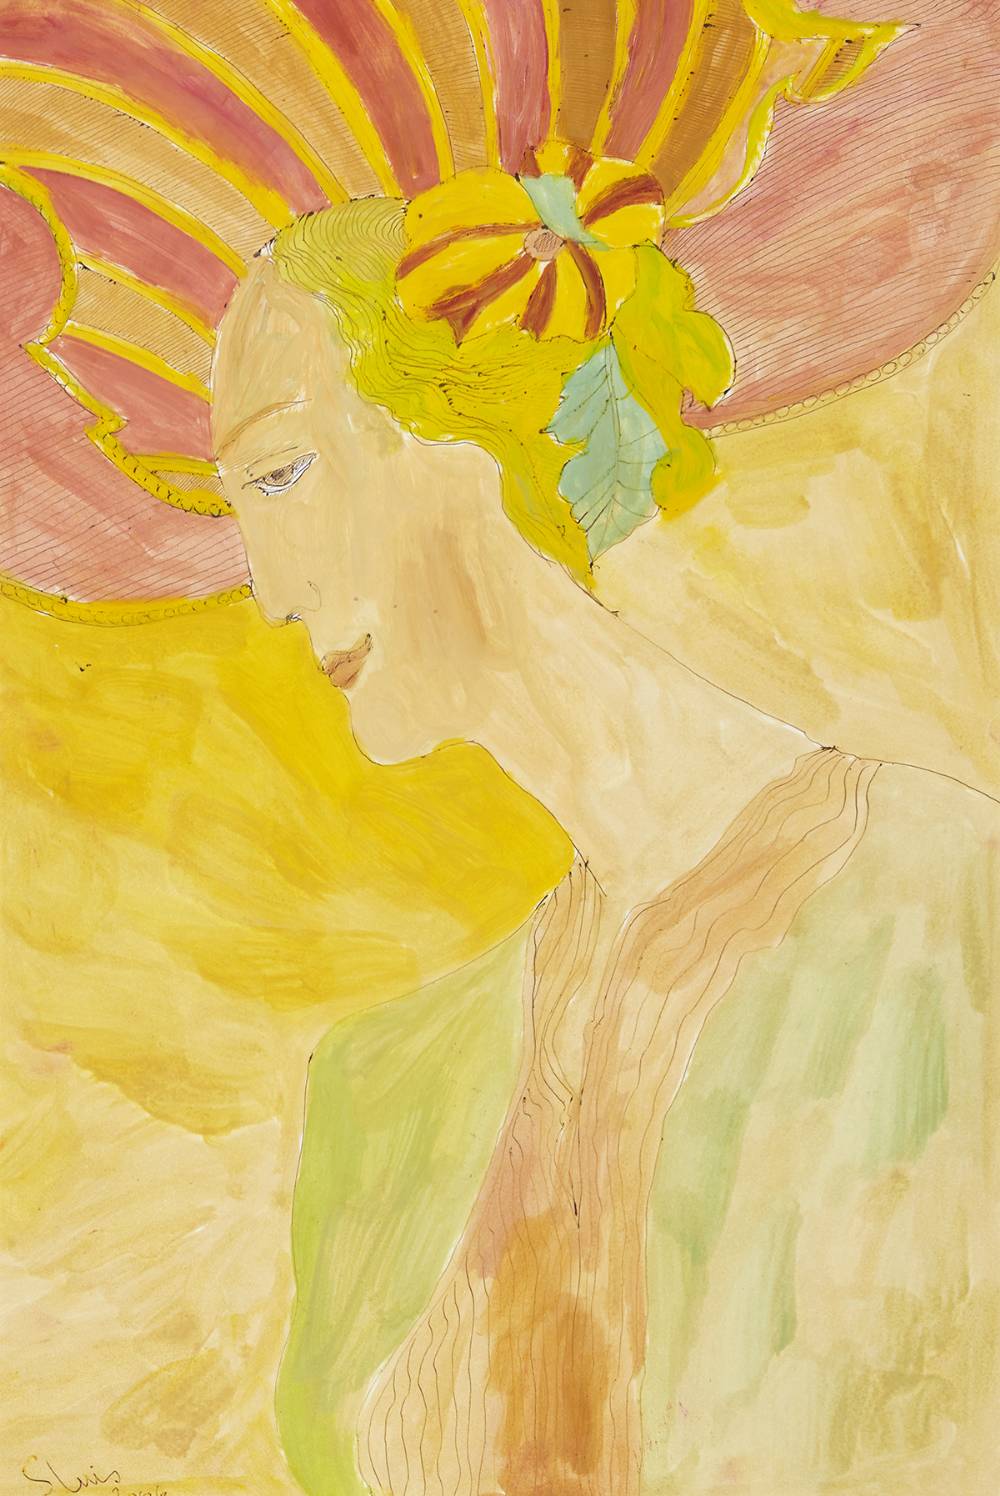 MIRIAM, PROFILE, 2006 by Piet Sluis (1929-2008) (1929-2008) at Whyte's Auctions